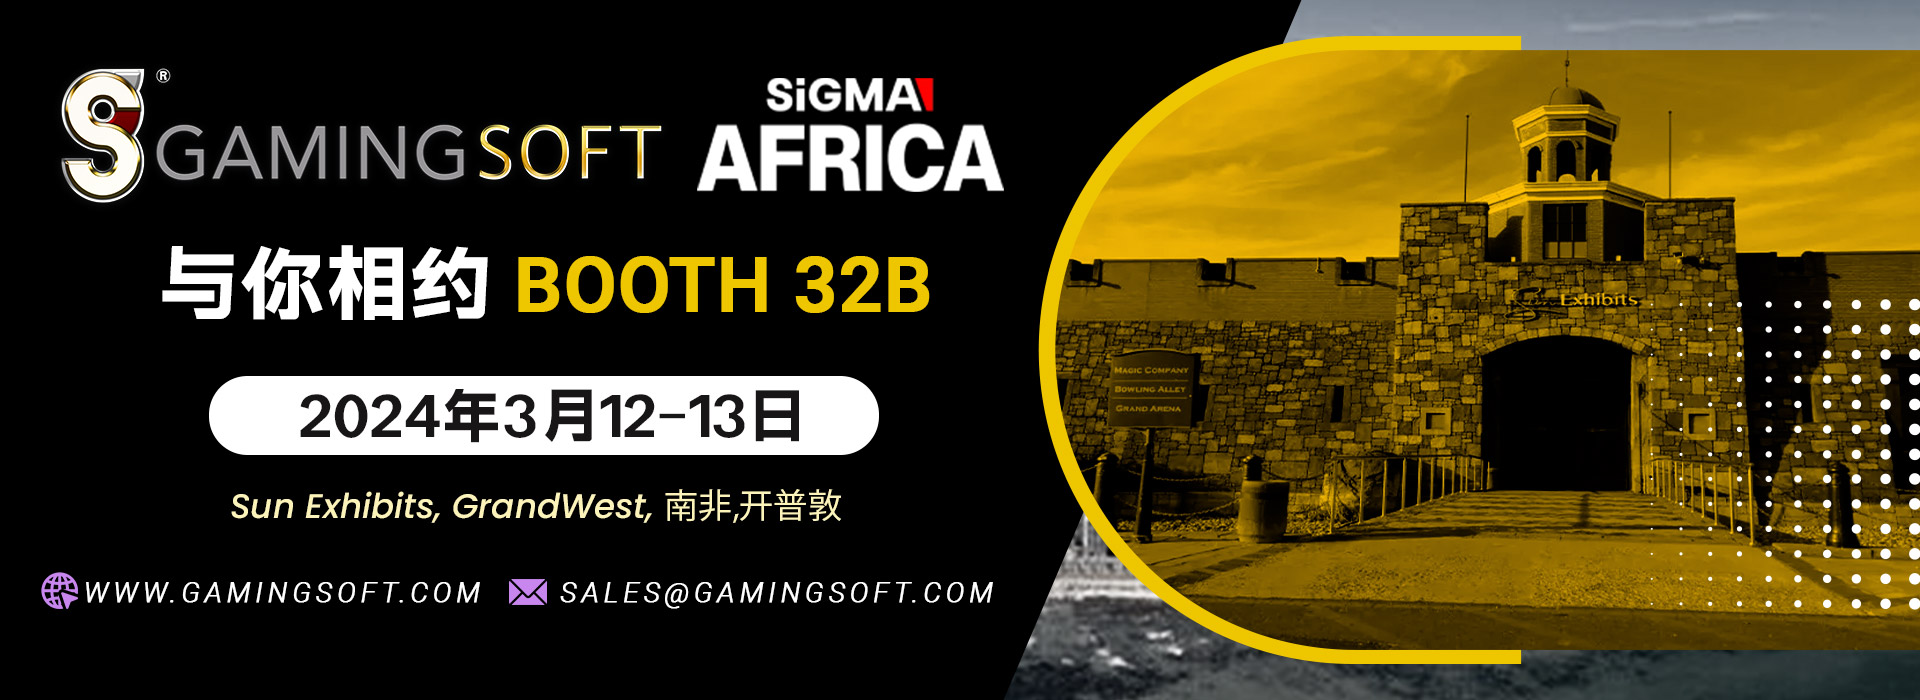 Sigma Africa 与你相约 Booth 32B  网页横幅 - 乐游国际GamingSoft